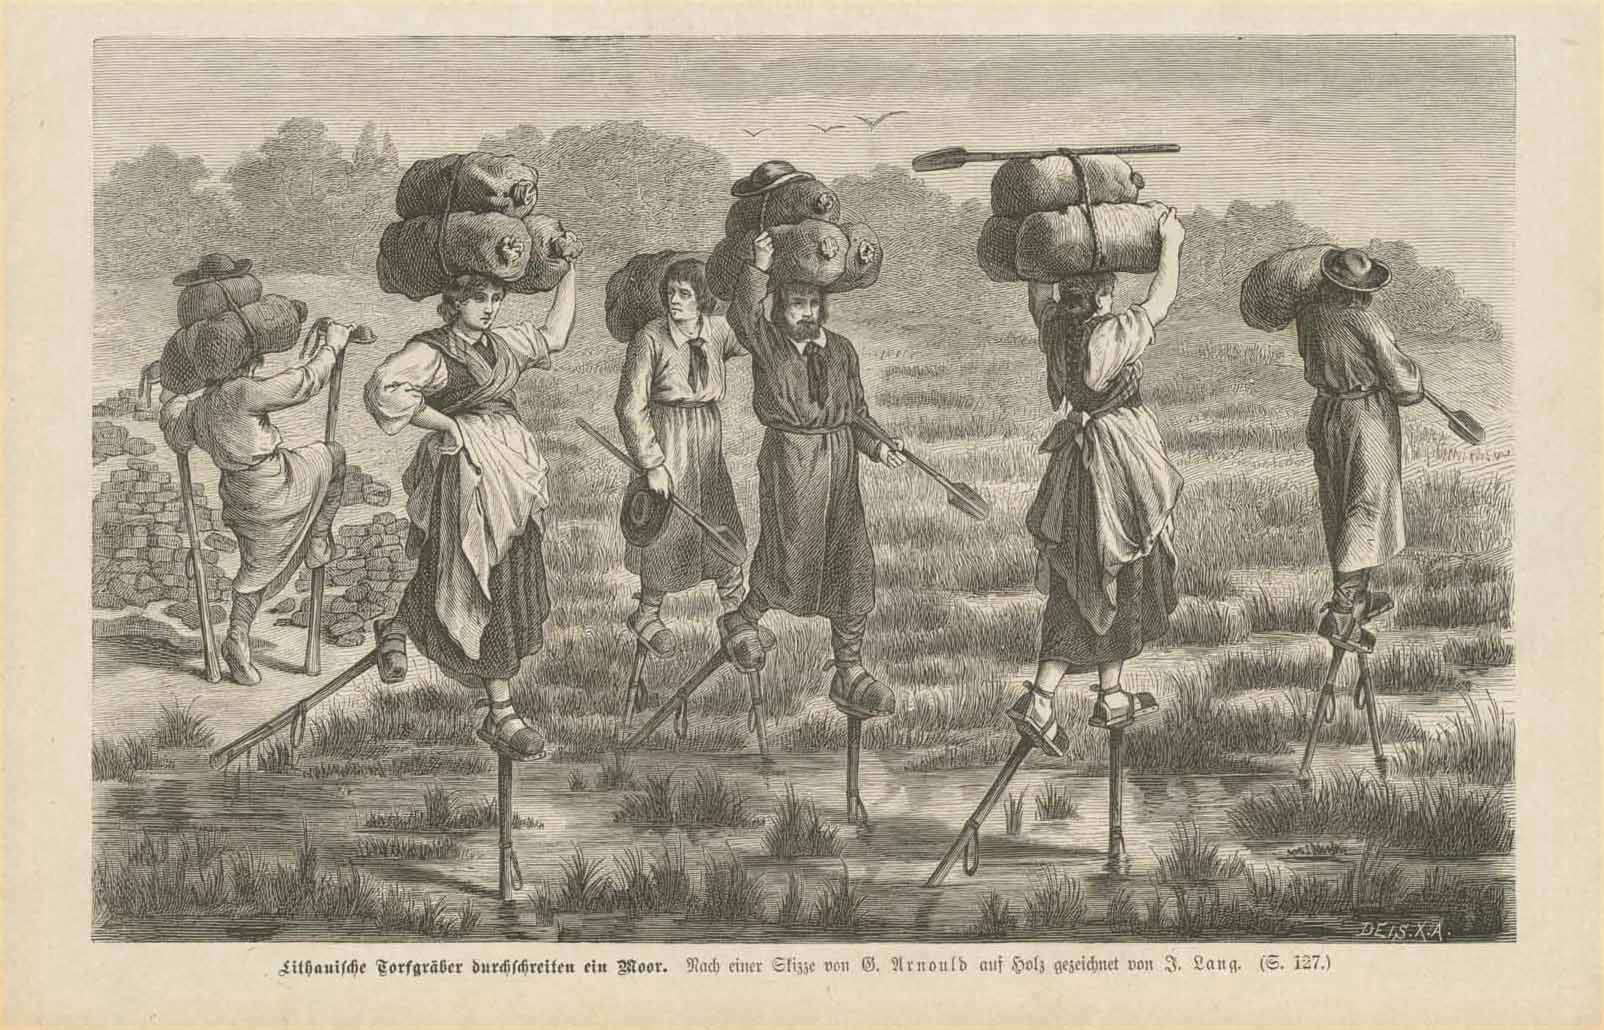 "Lithauische Torfgraeber durschschreiten ein Moor" (Lithuanian peat diggers walk through a moor)  Wood engraving after Arnould and Lang published 1879.  Original antique print  